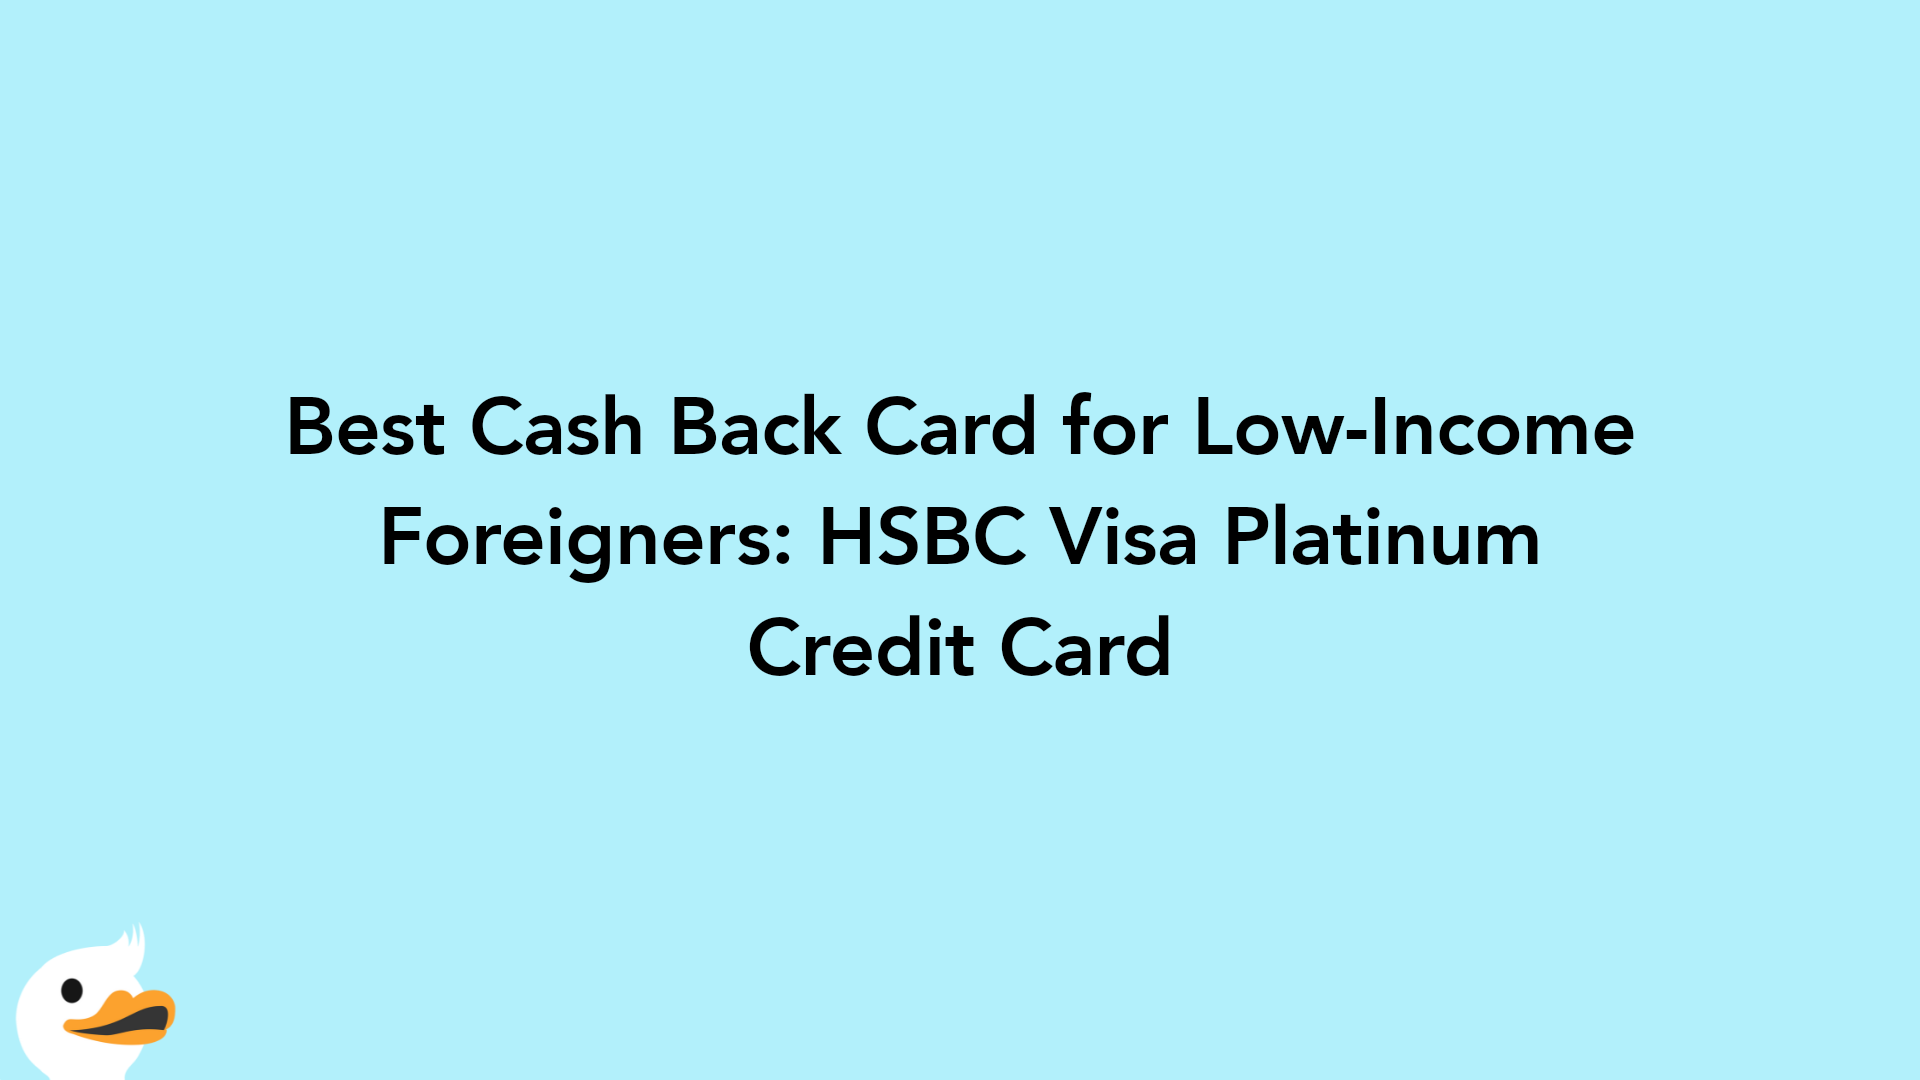 Best Cash Back Card for Low-Income Foreigners: HSBC Visa Platinum Credit Card